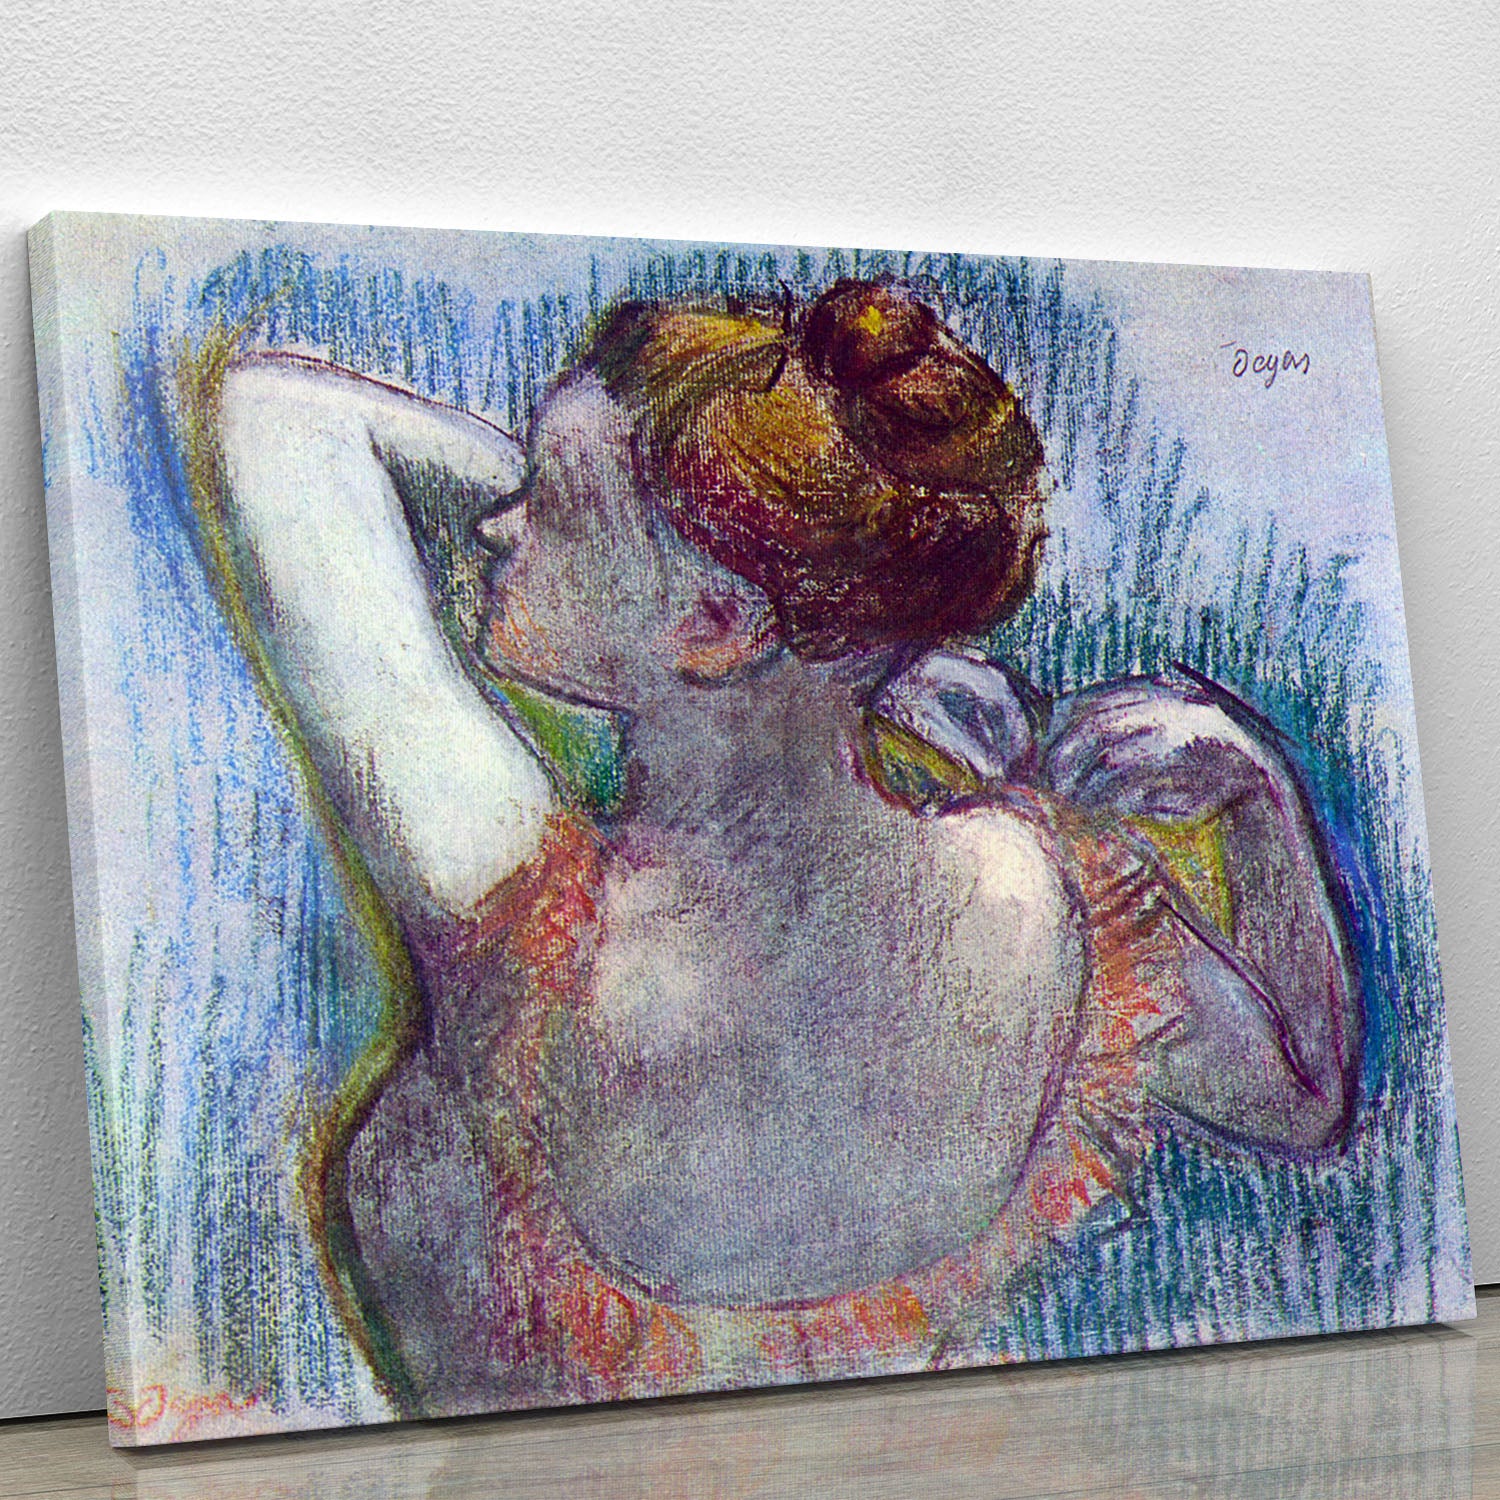 Dancer by Degas Canvas Print or Poster - Canvas Art Rocks - 1